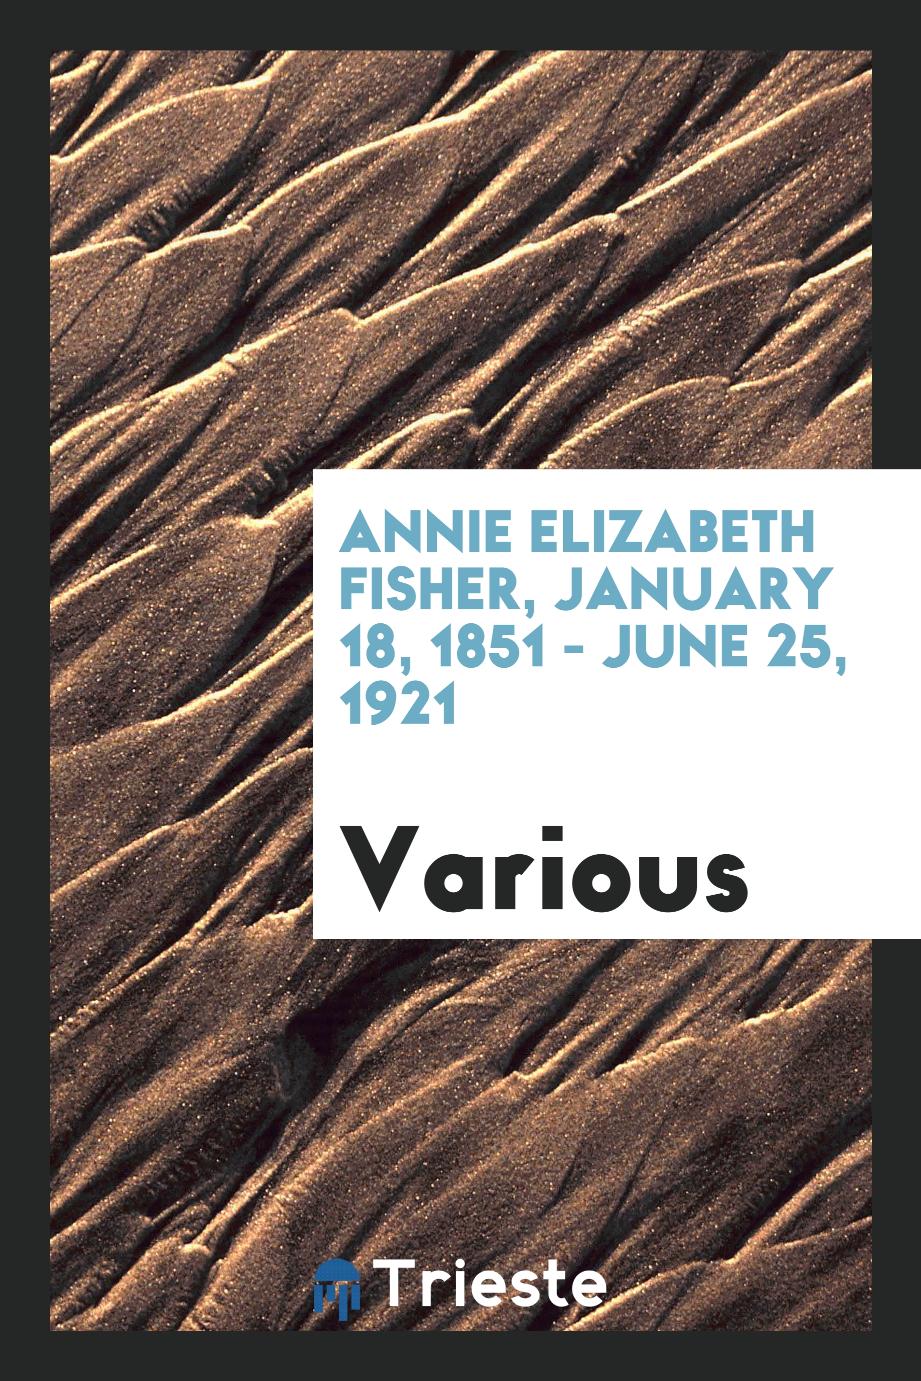 Annie Elizabeth Fisher, January 18, 1851 - June 25, 1921